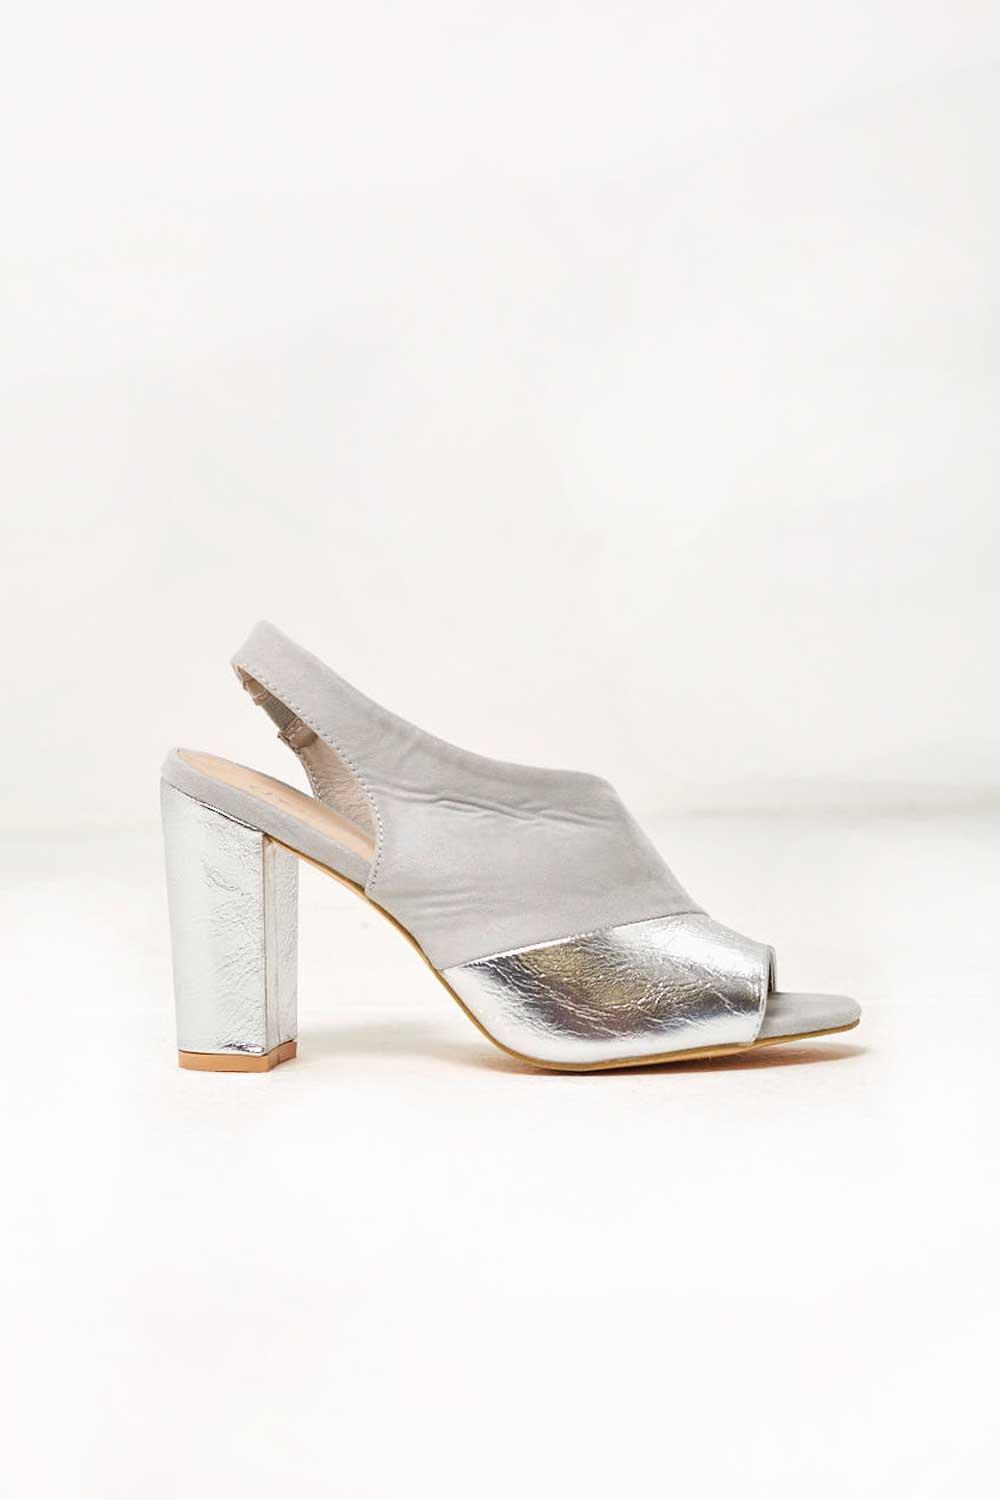 Lacyhop Womens Heeled Sandals Fashion Block Heels Peep Toe Dress Shoes Gray  Size 4.5 - Walmart.com